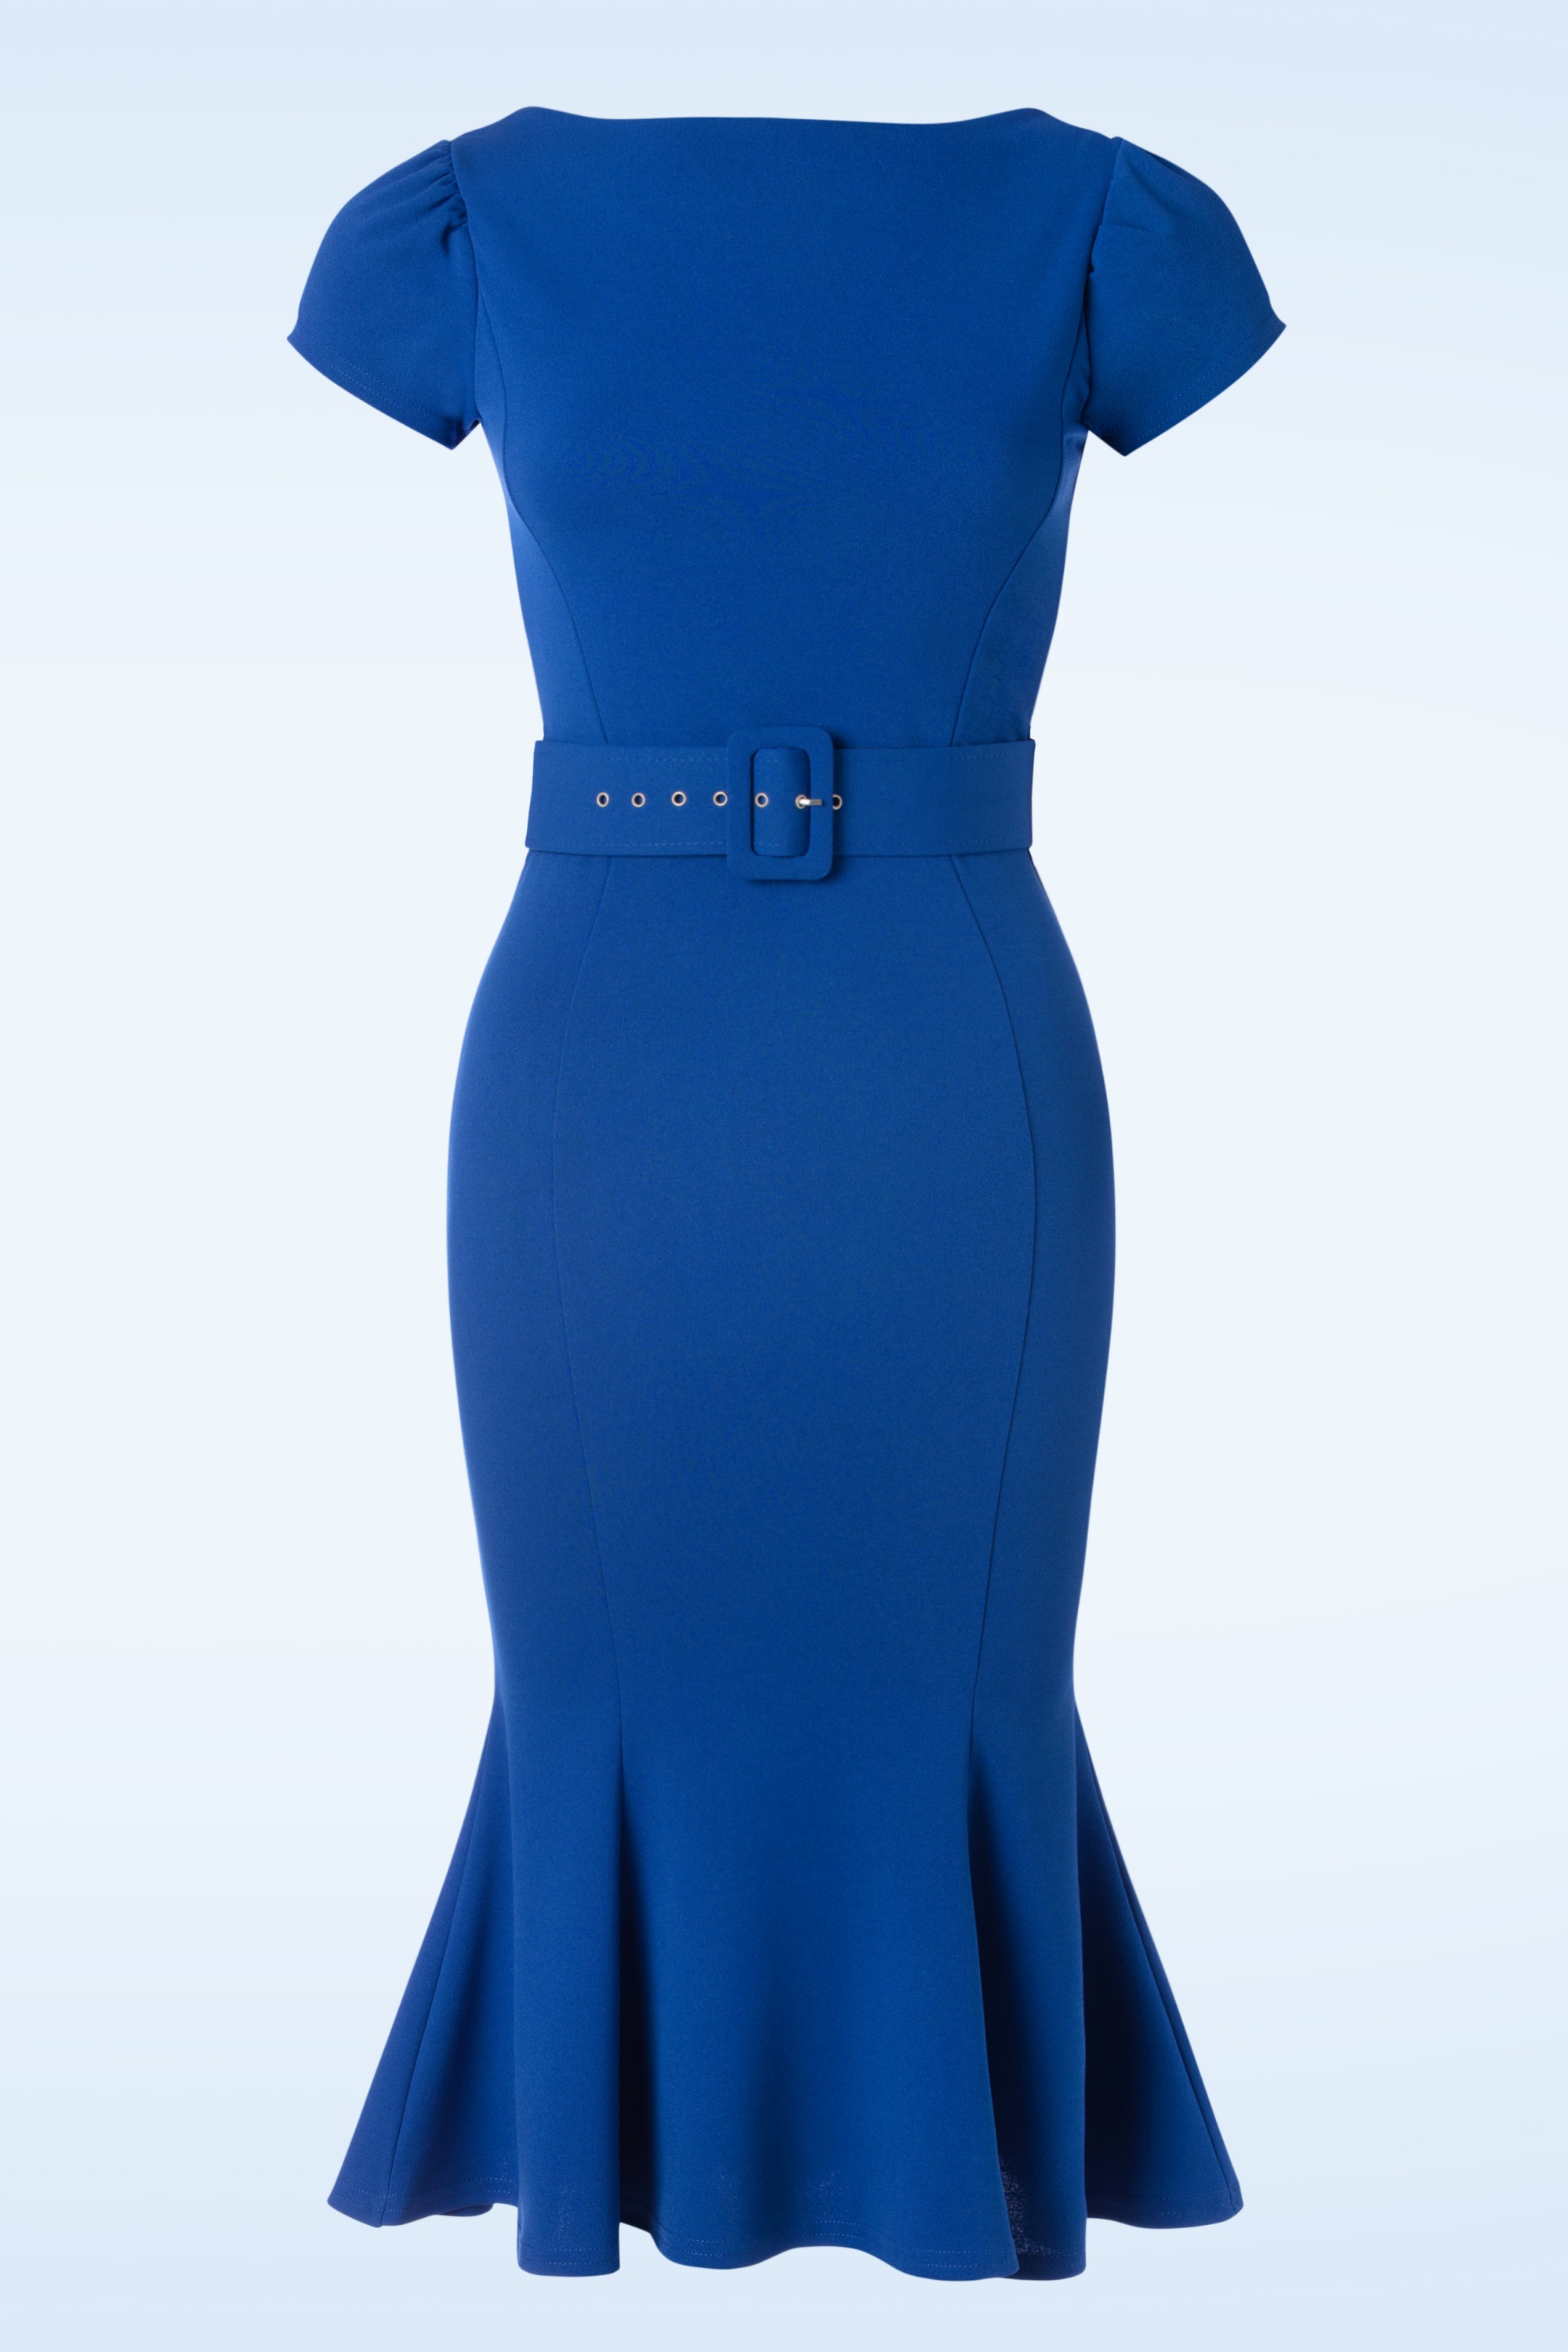 Vintage Chic for Topvintage - Gwen pencil jurk in koningsblauw